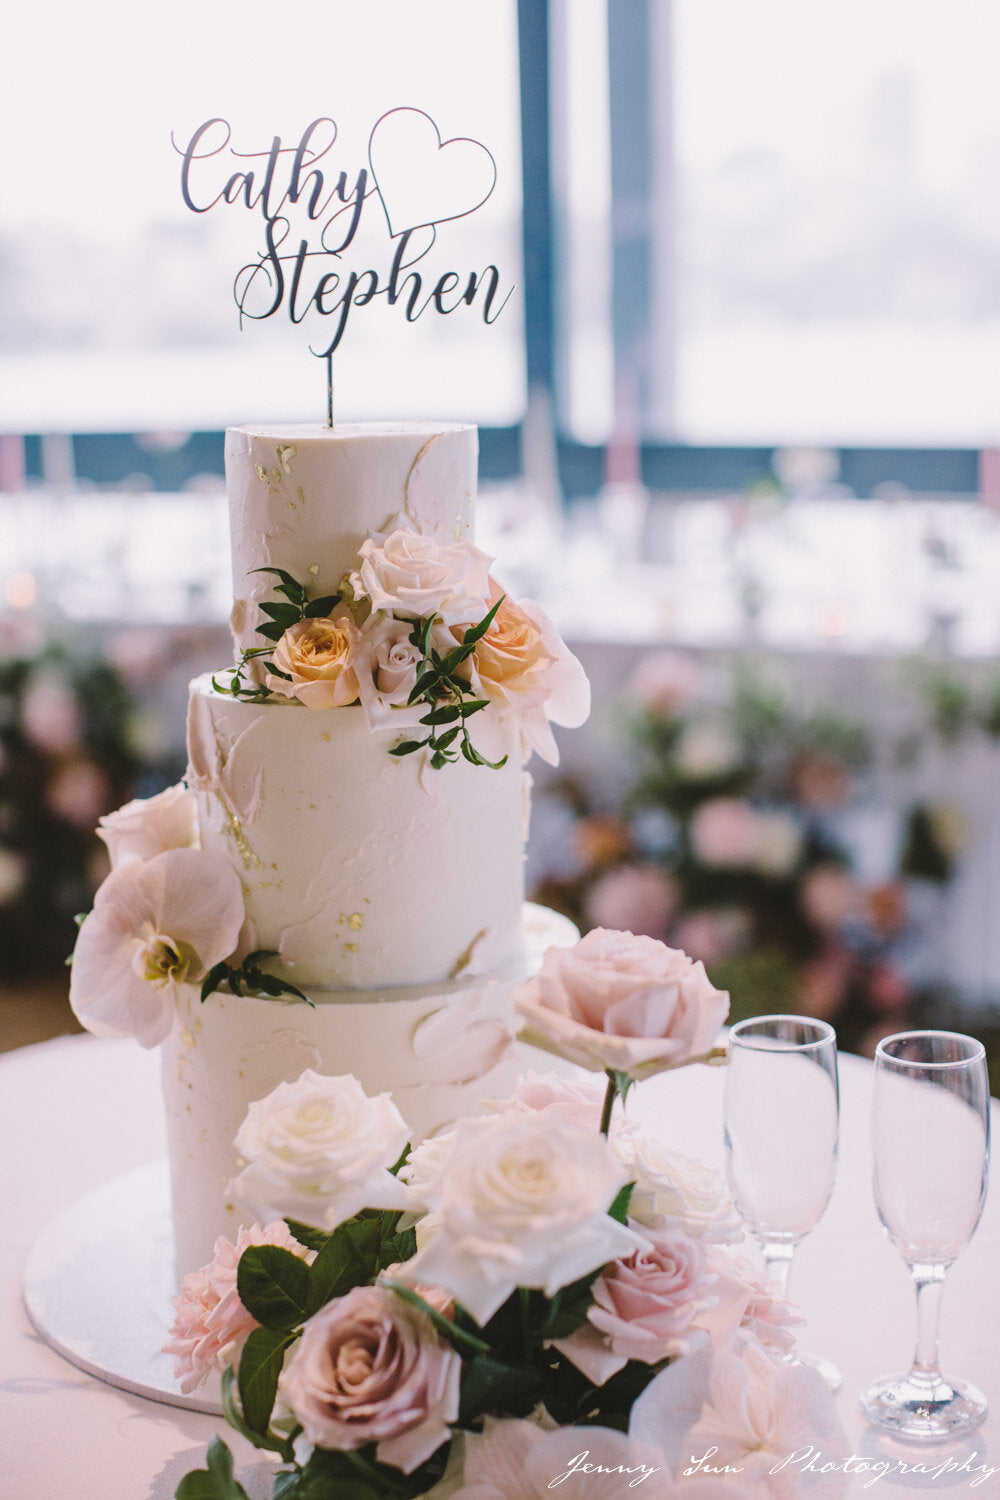 sydney wedding cake pier one with flowers